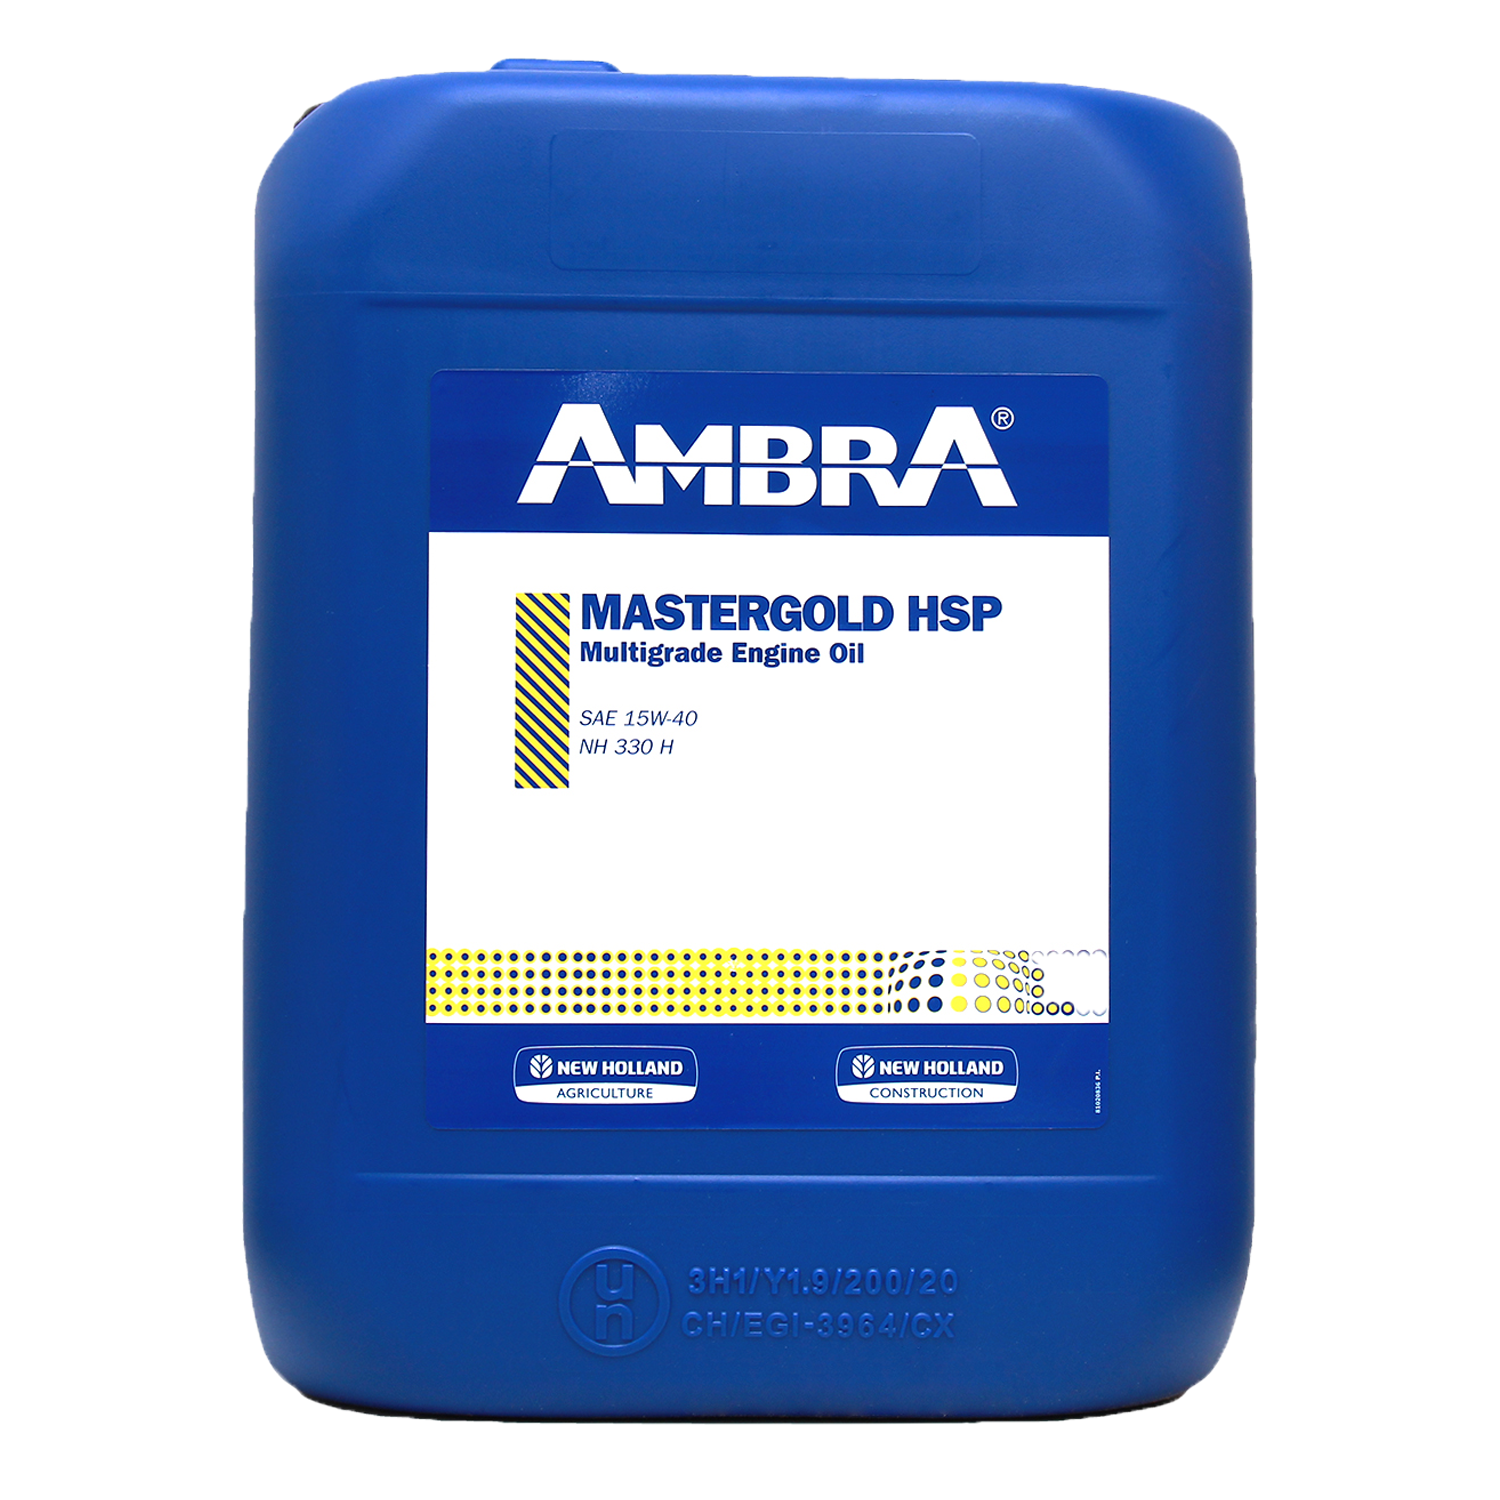 AmbrA Master Gold HSP 15W-40 20 Liter